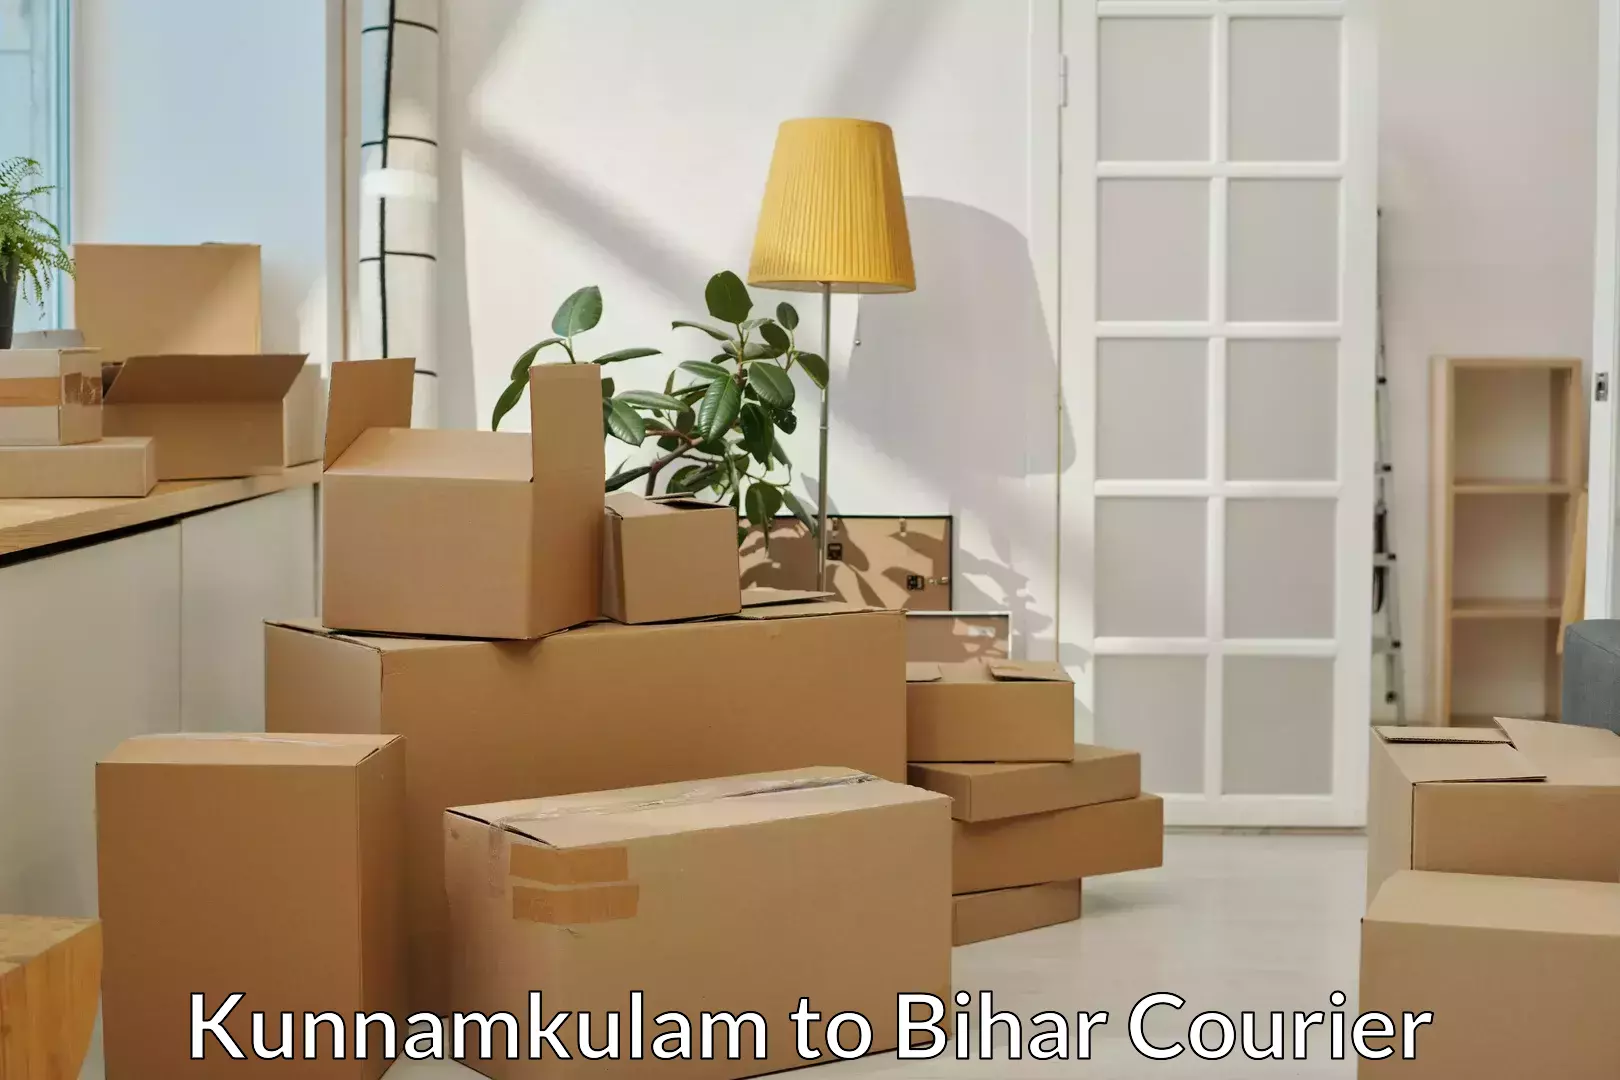 Professional home movers in Kunnamkulam to Katoria